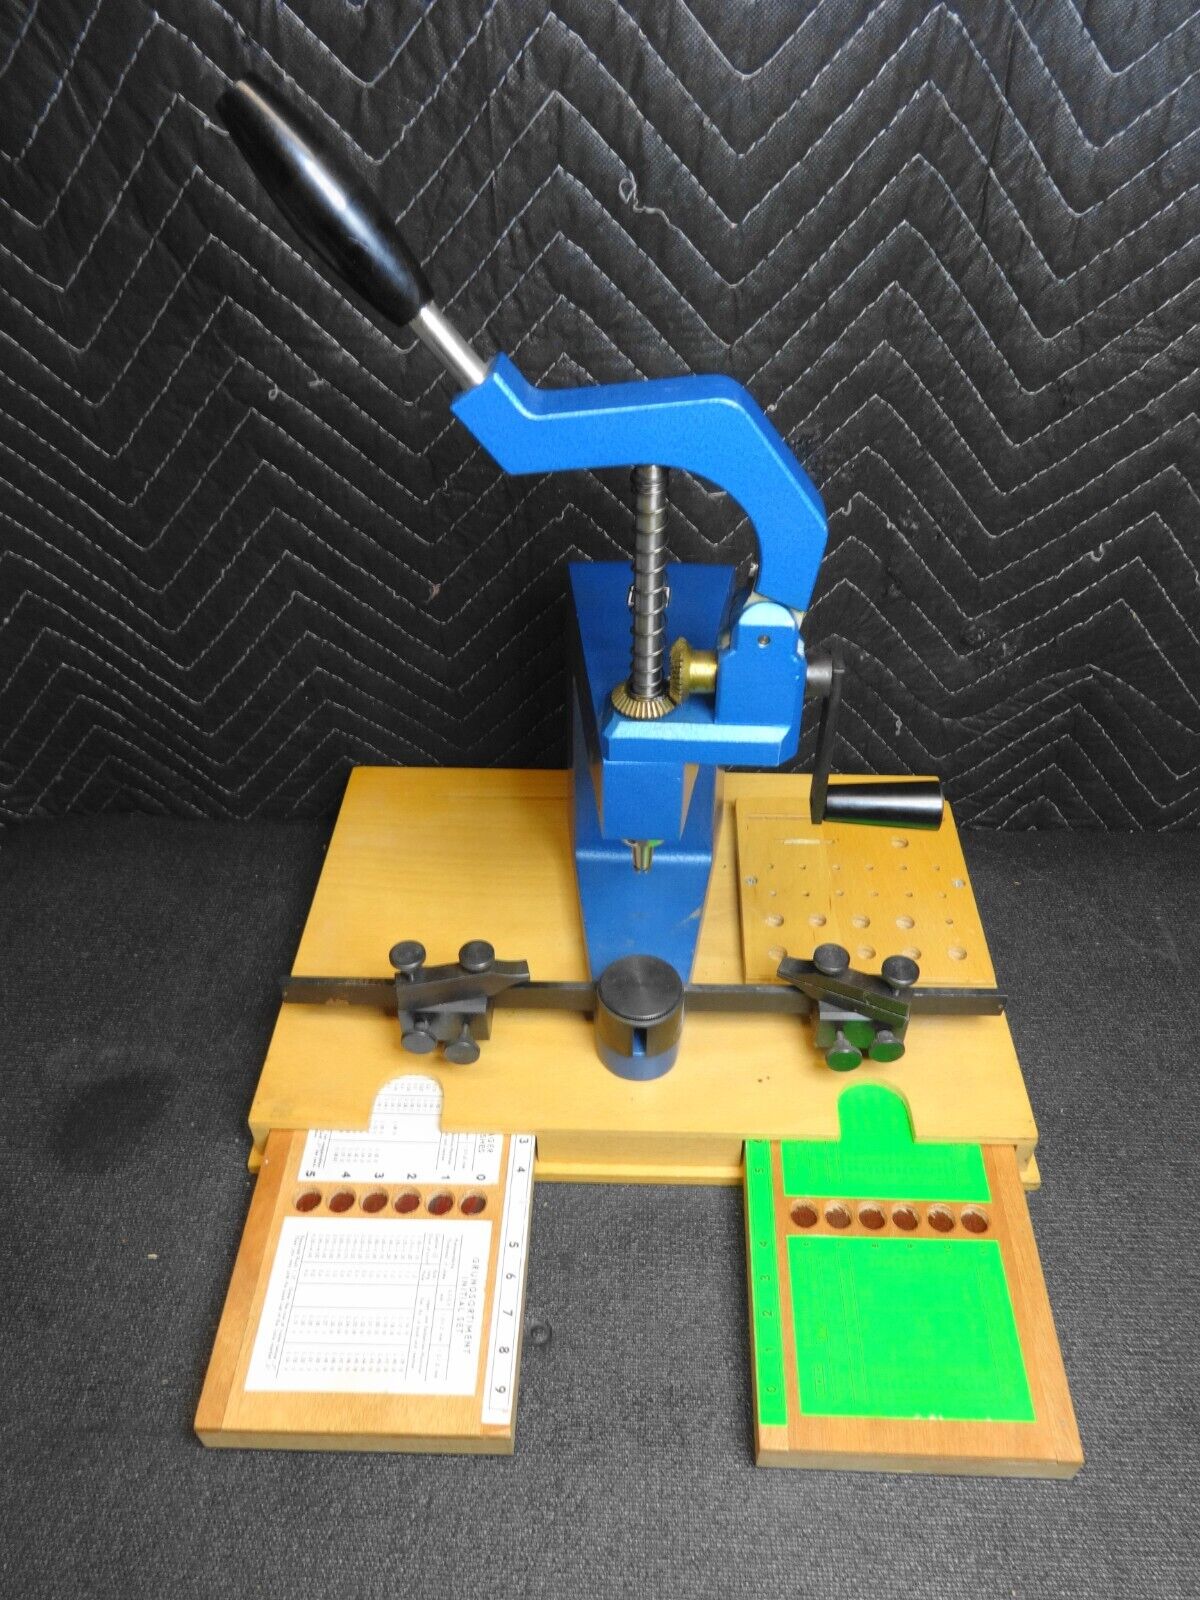 KWM / ELMA German Clock Bushing Machine Tool + Accessories & Bushings